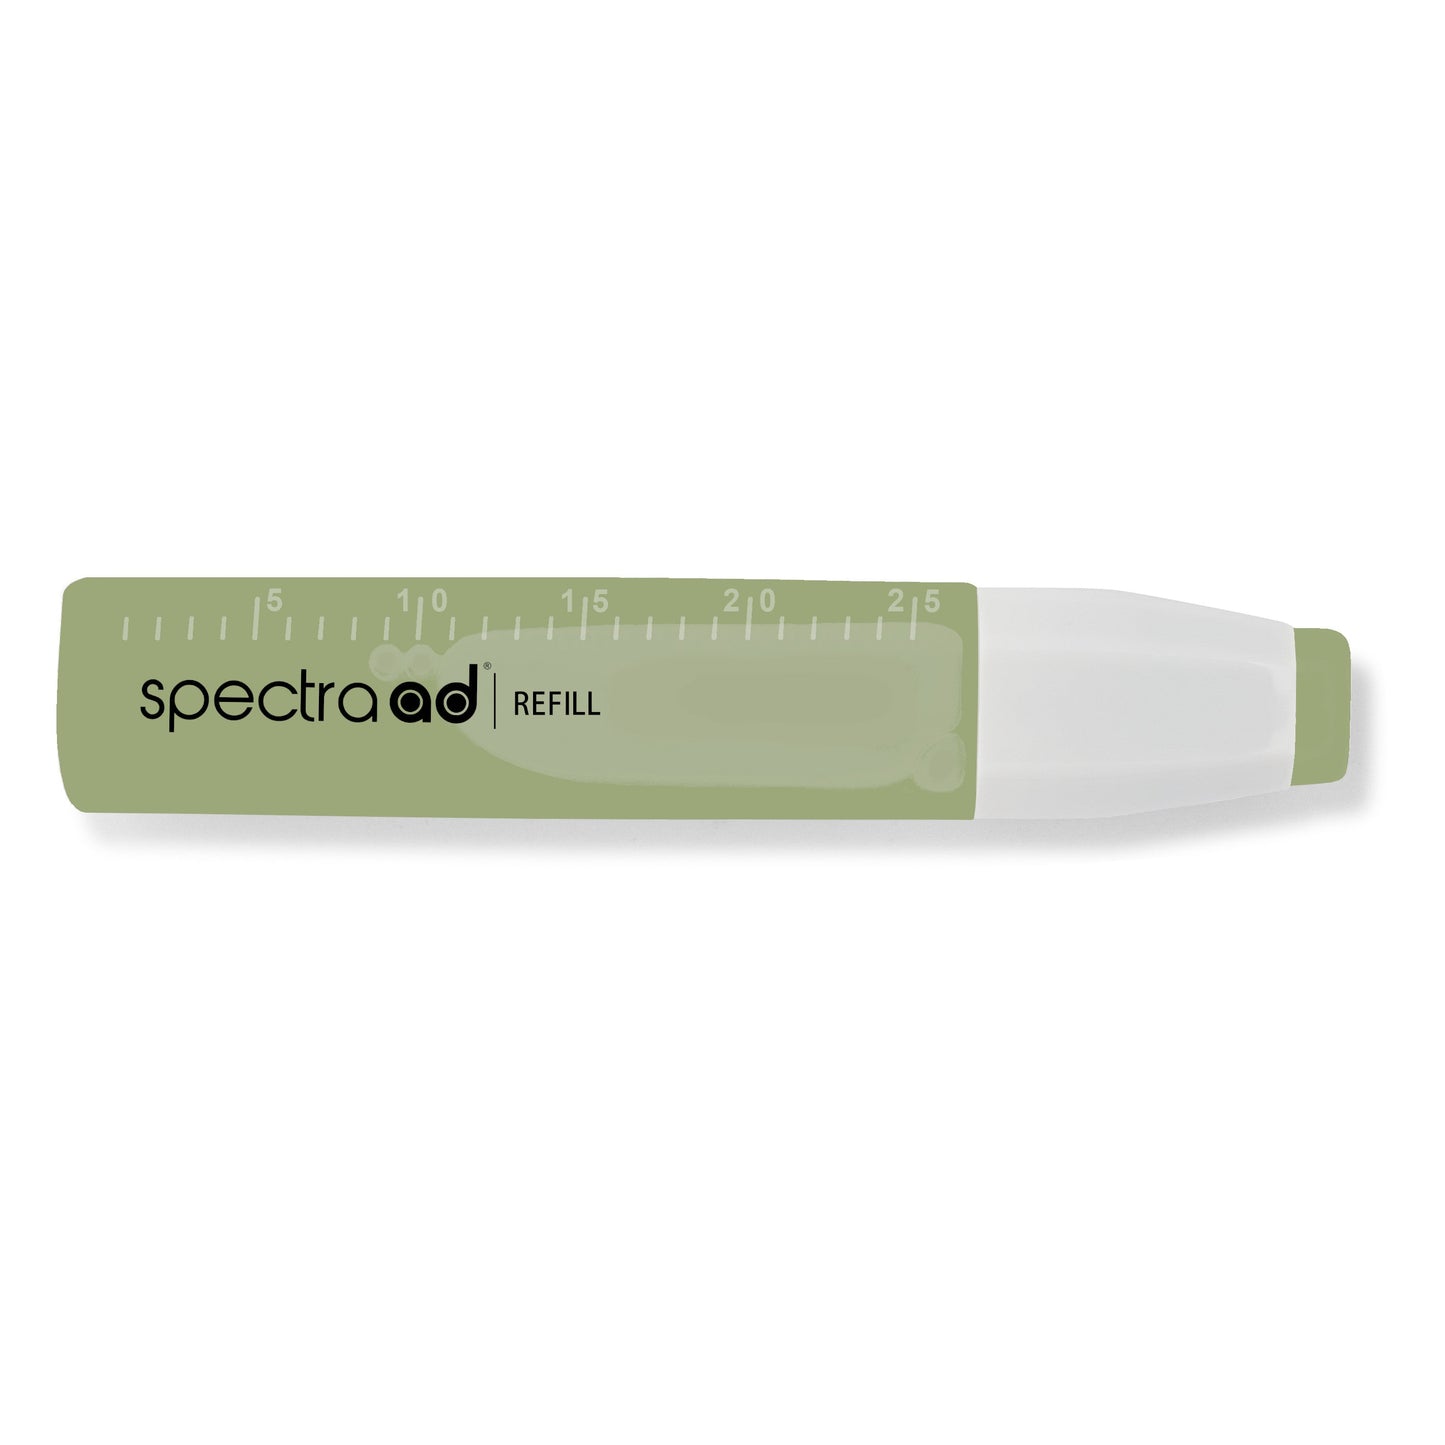 048 - Leaf Green - Spectra AD Refill Bottle